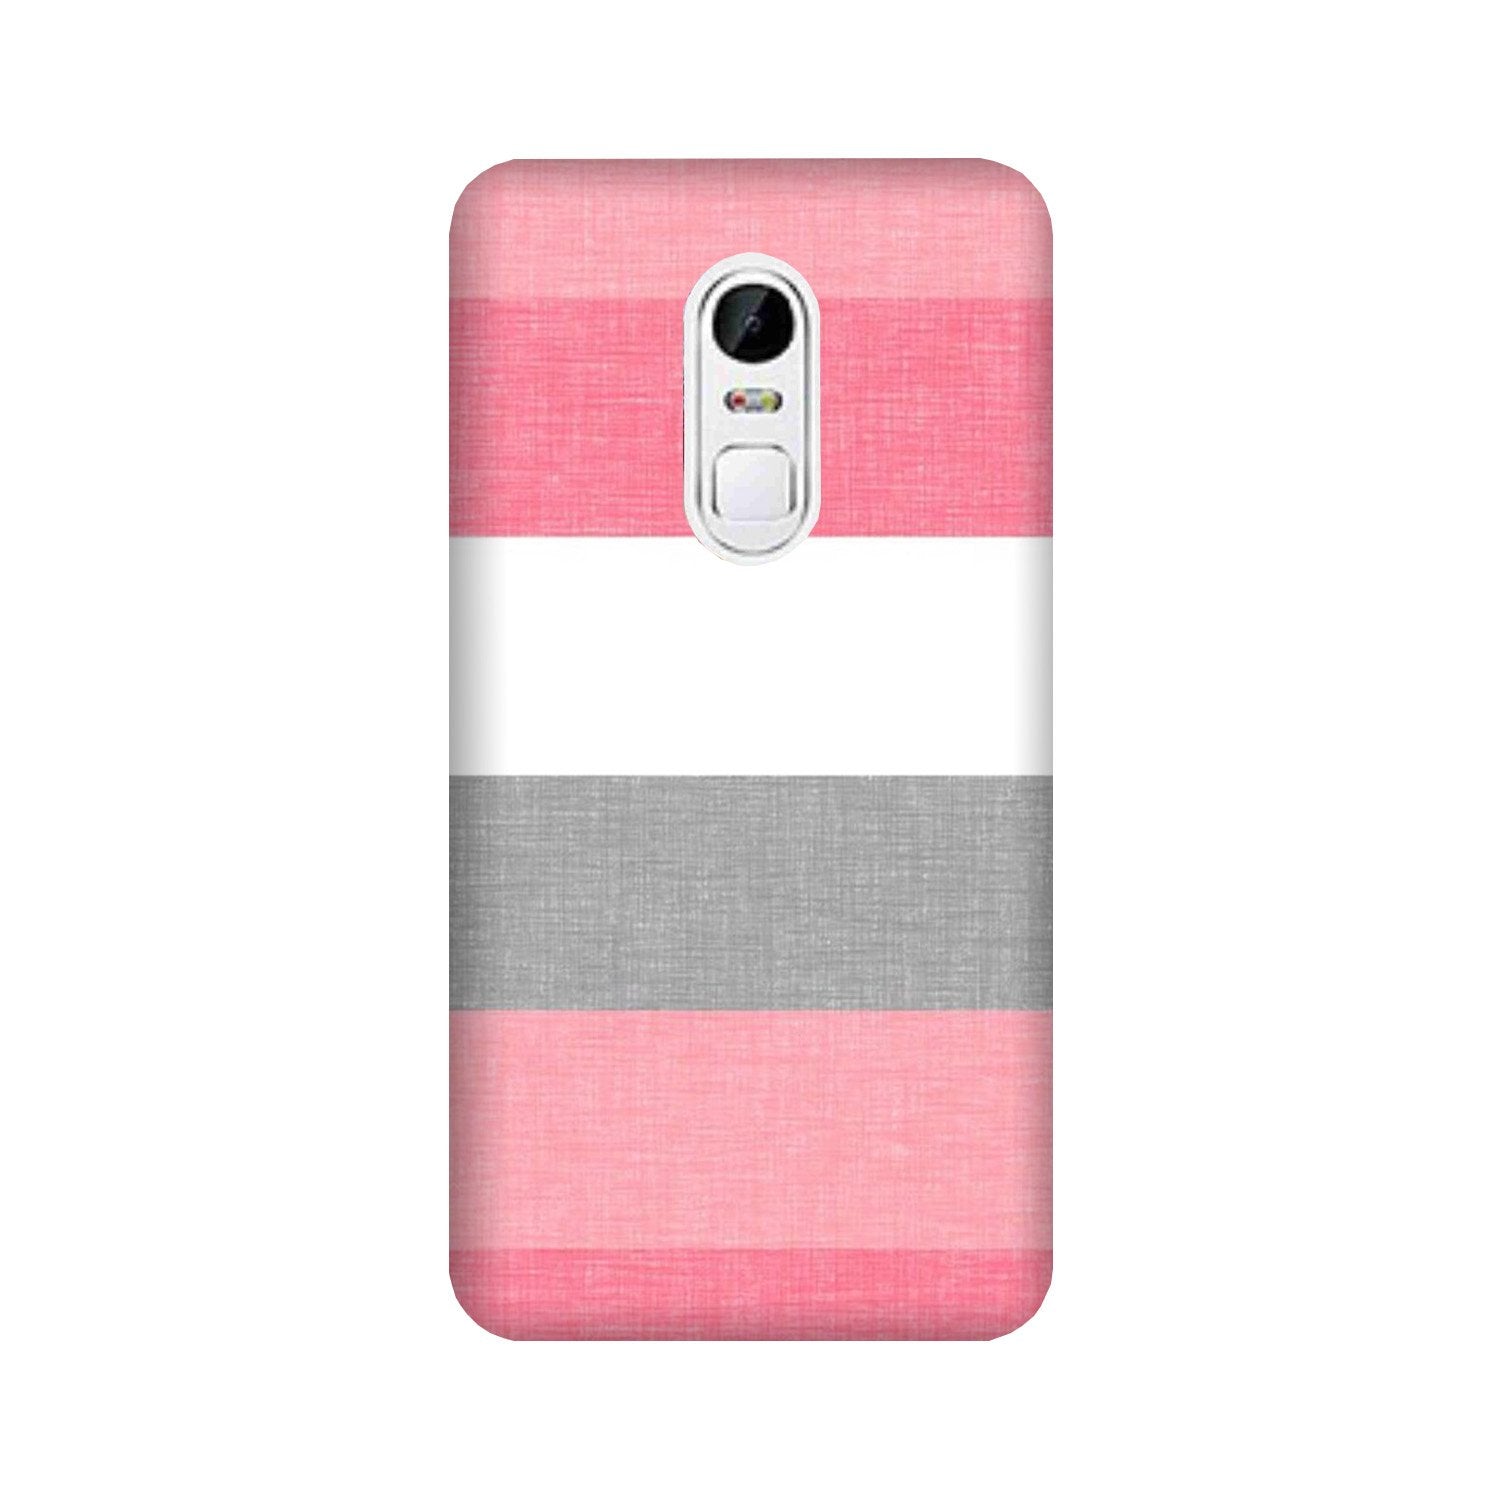 Pink white pattern Case for Lenovo Vibe X3